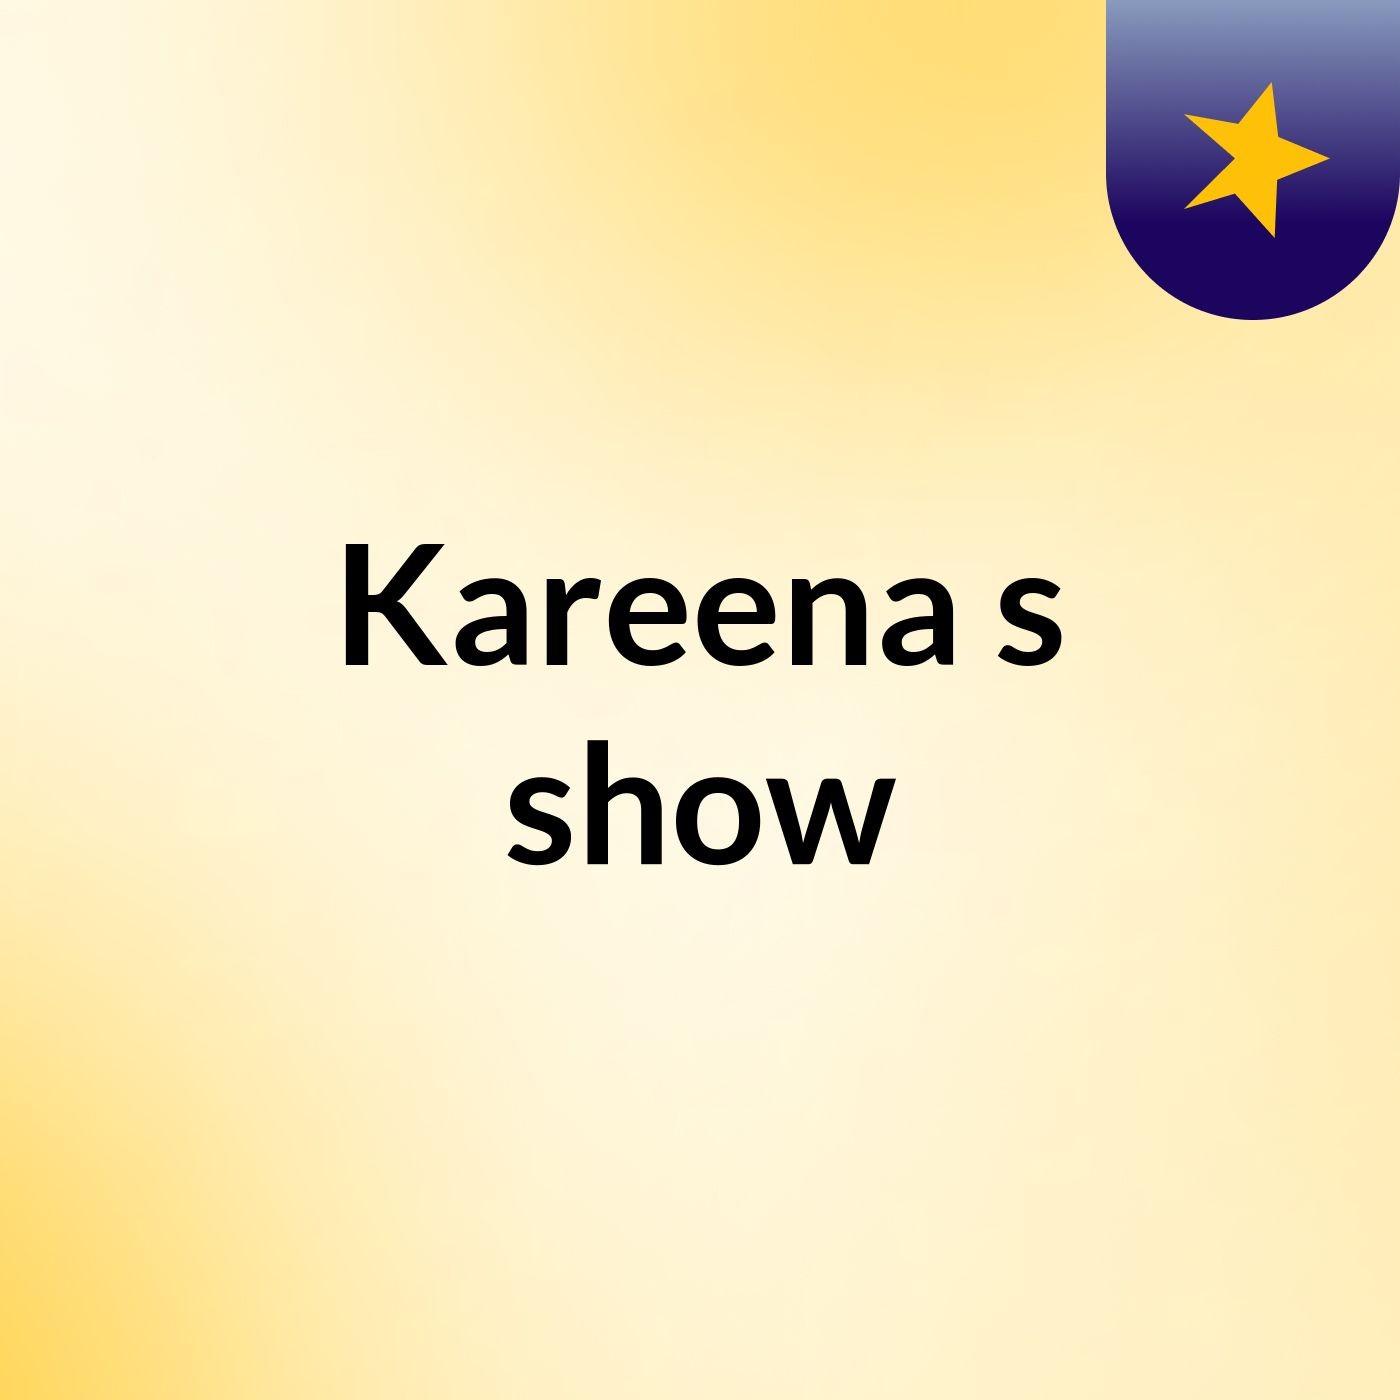 Kareena's show